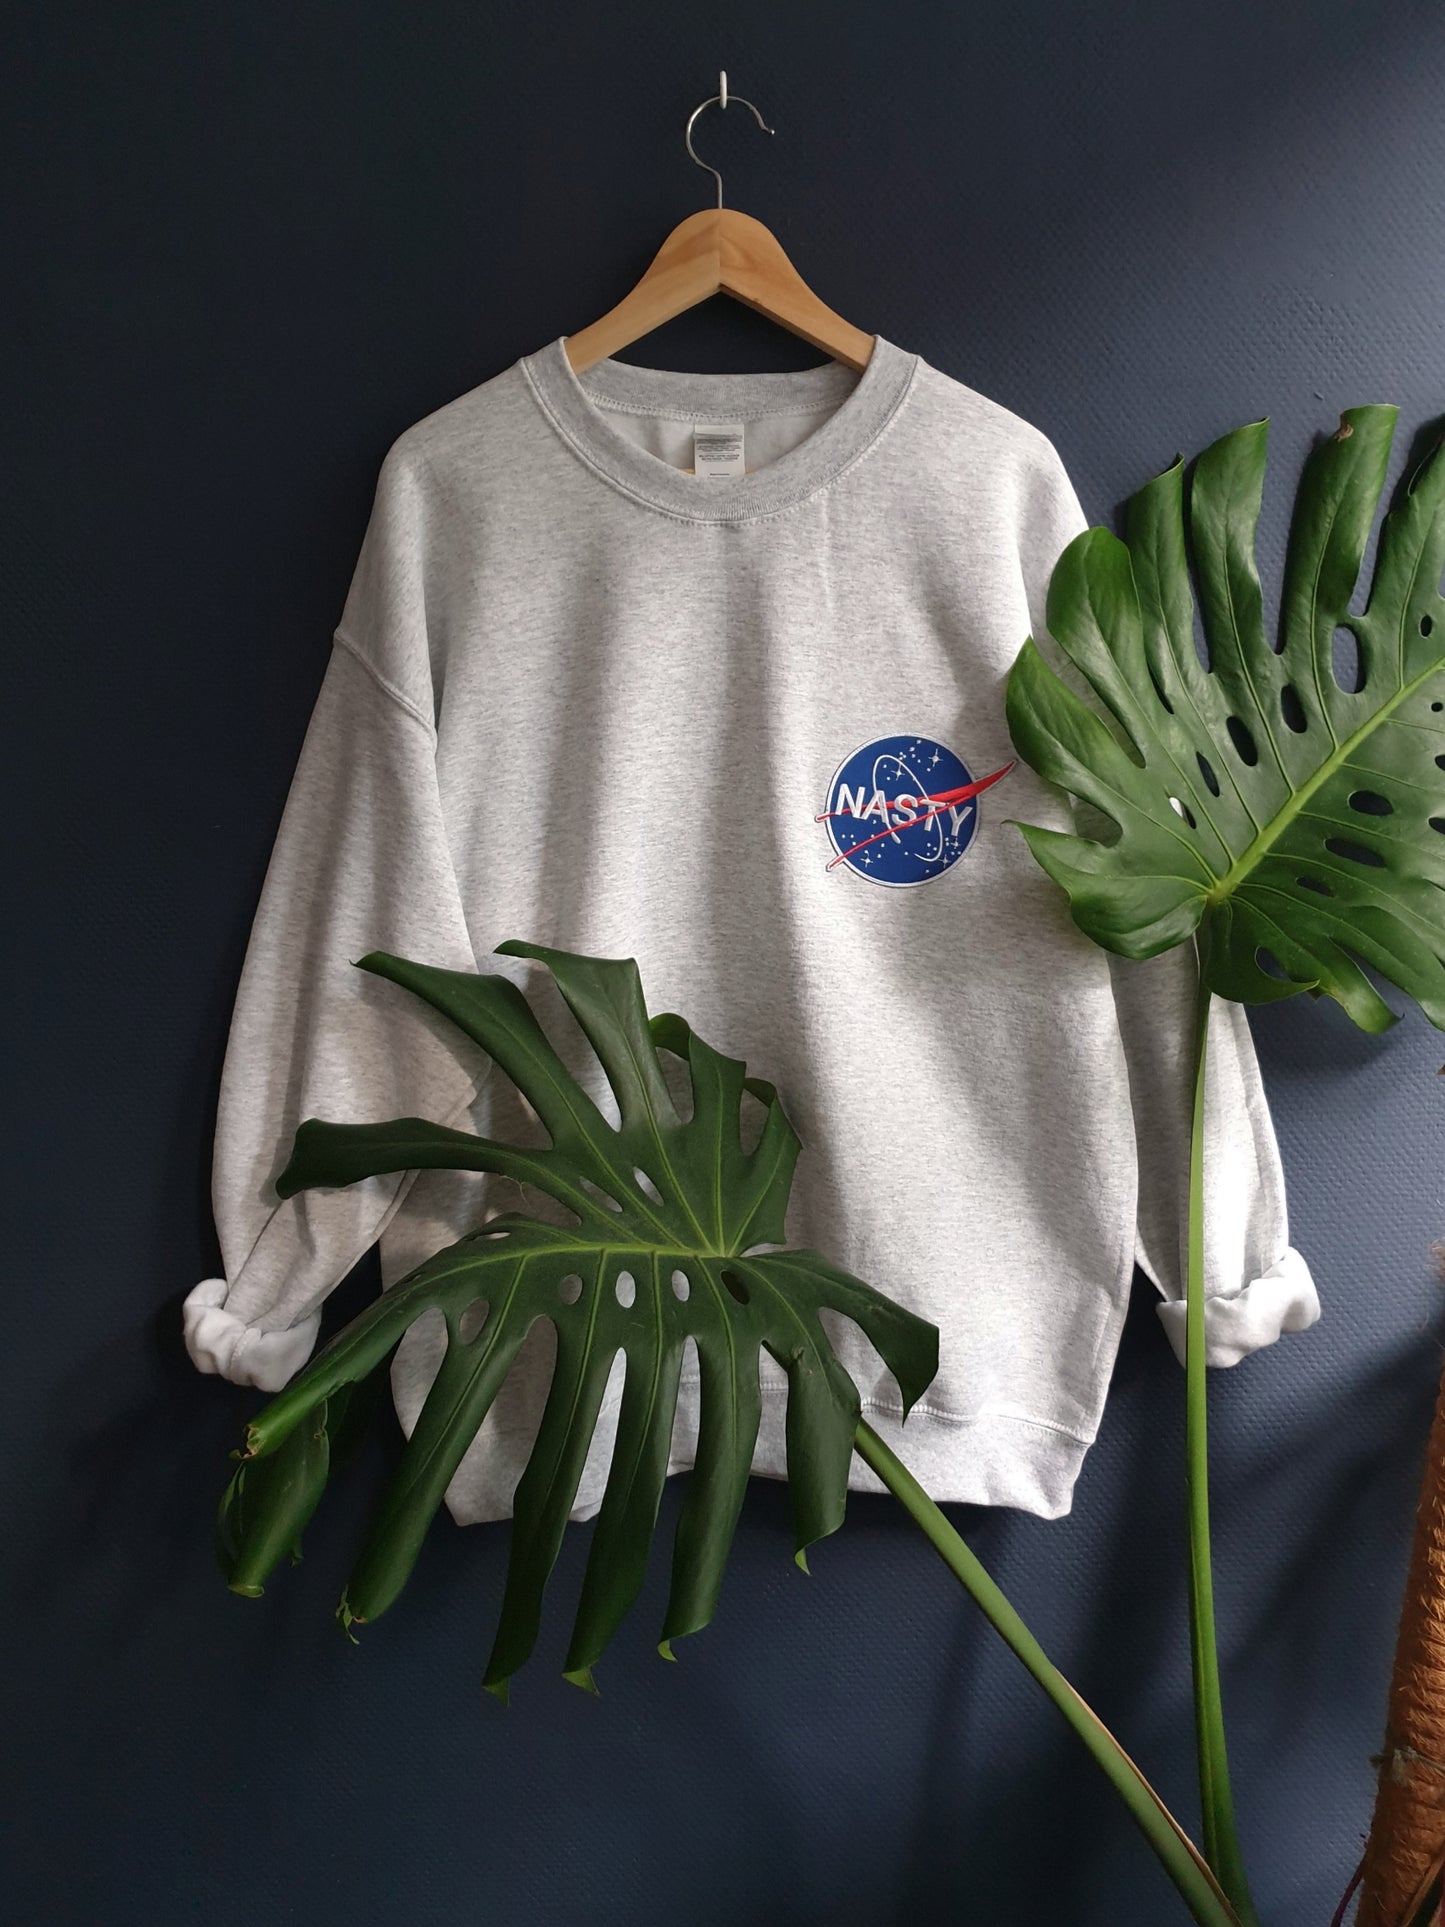 Nasty NASA Sweater -  Spacy Shirts